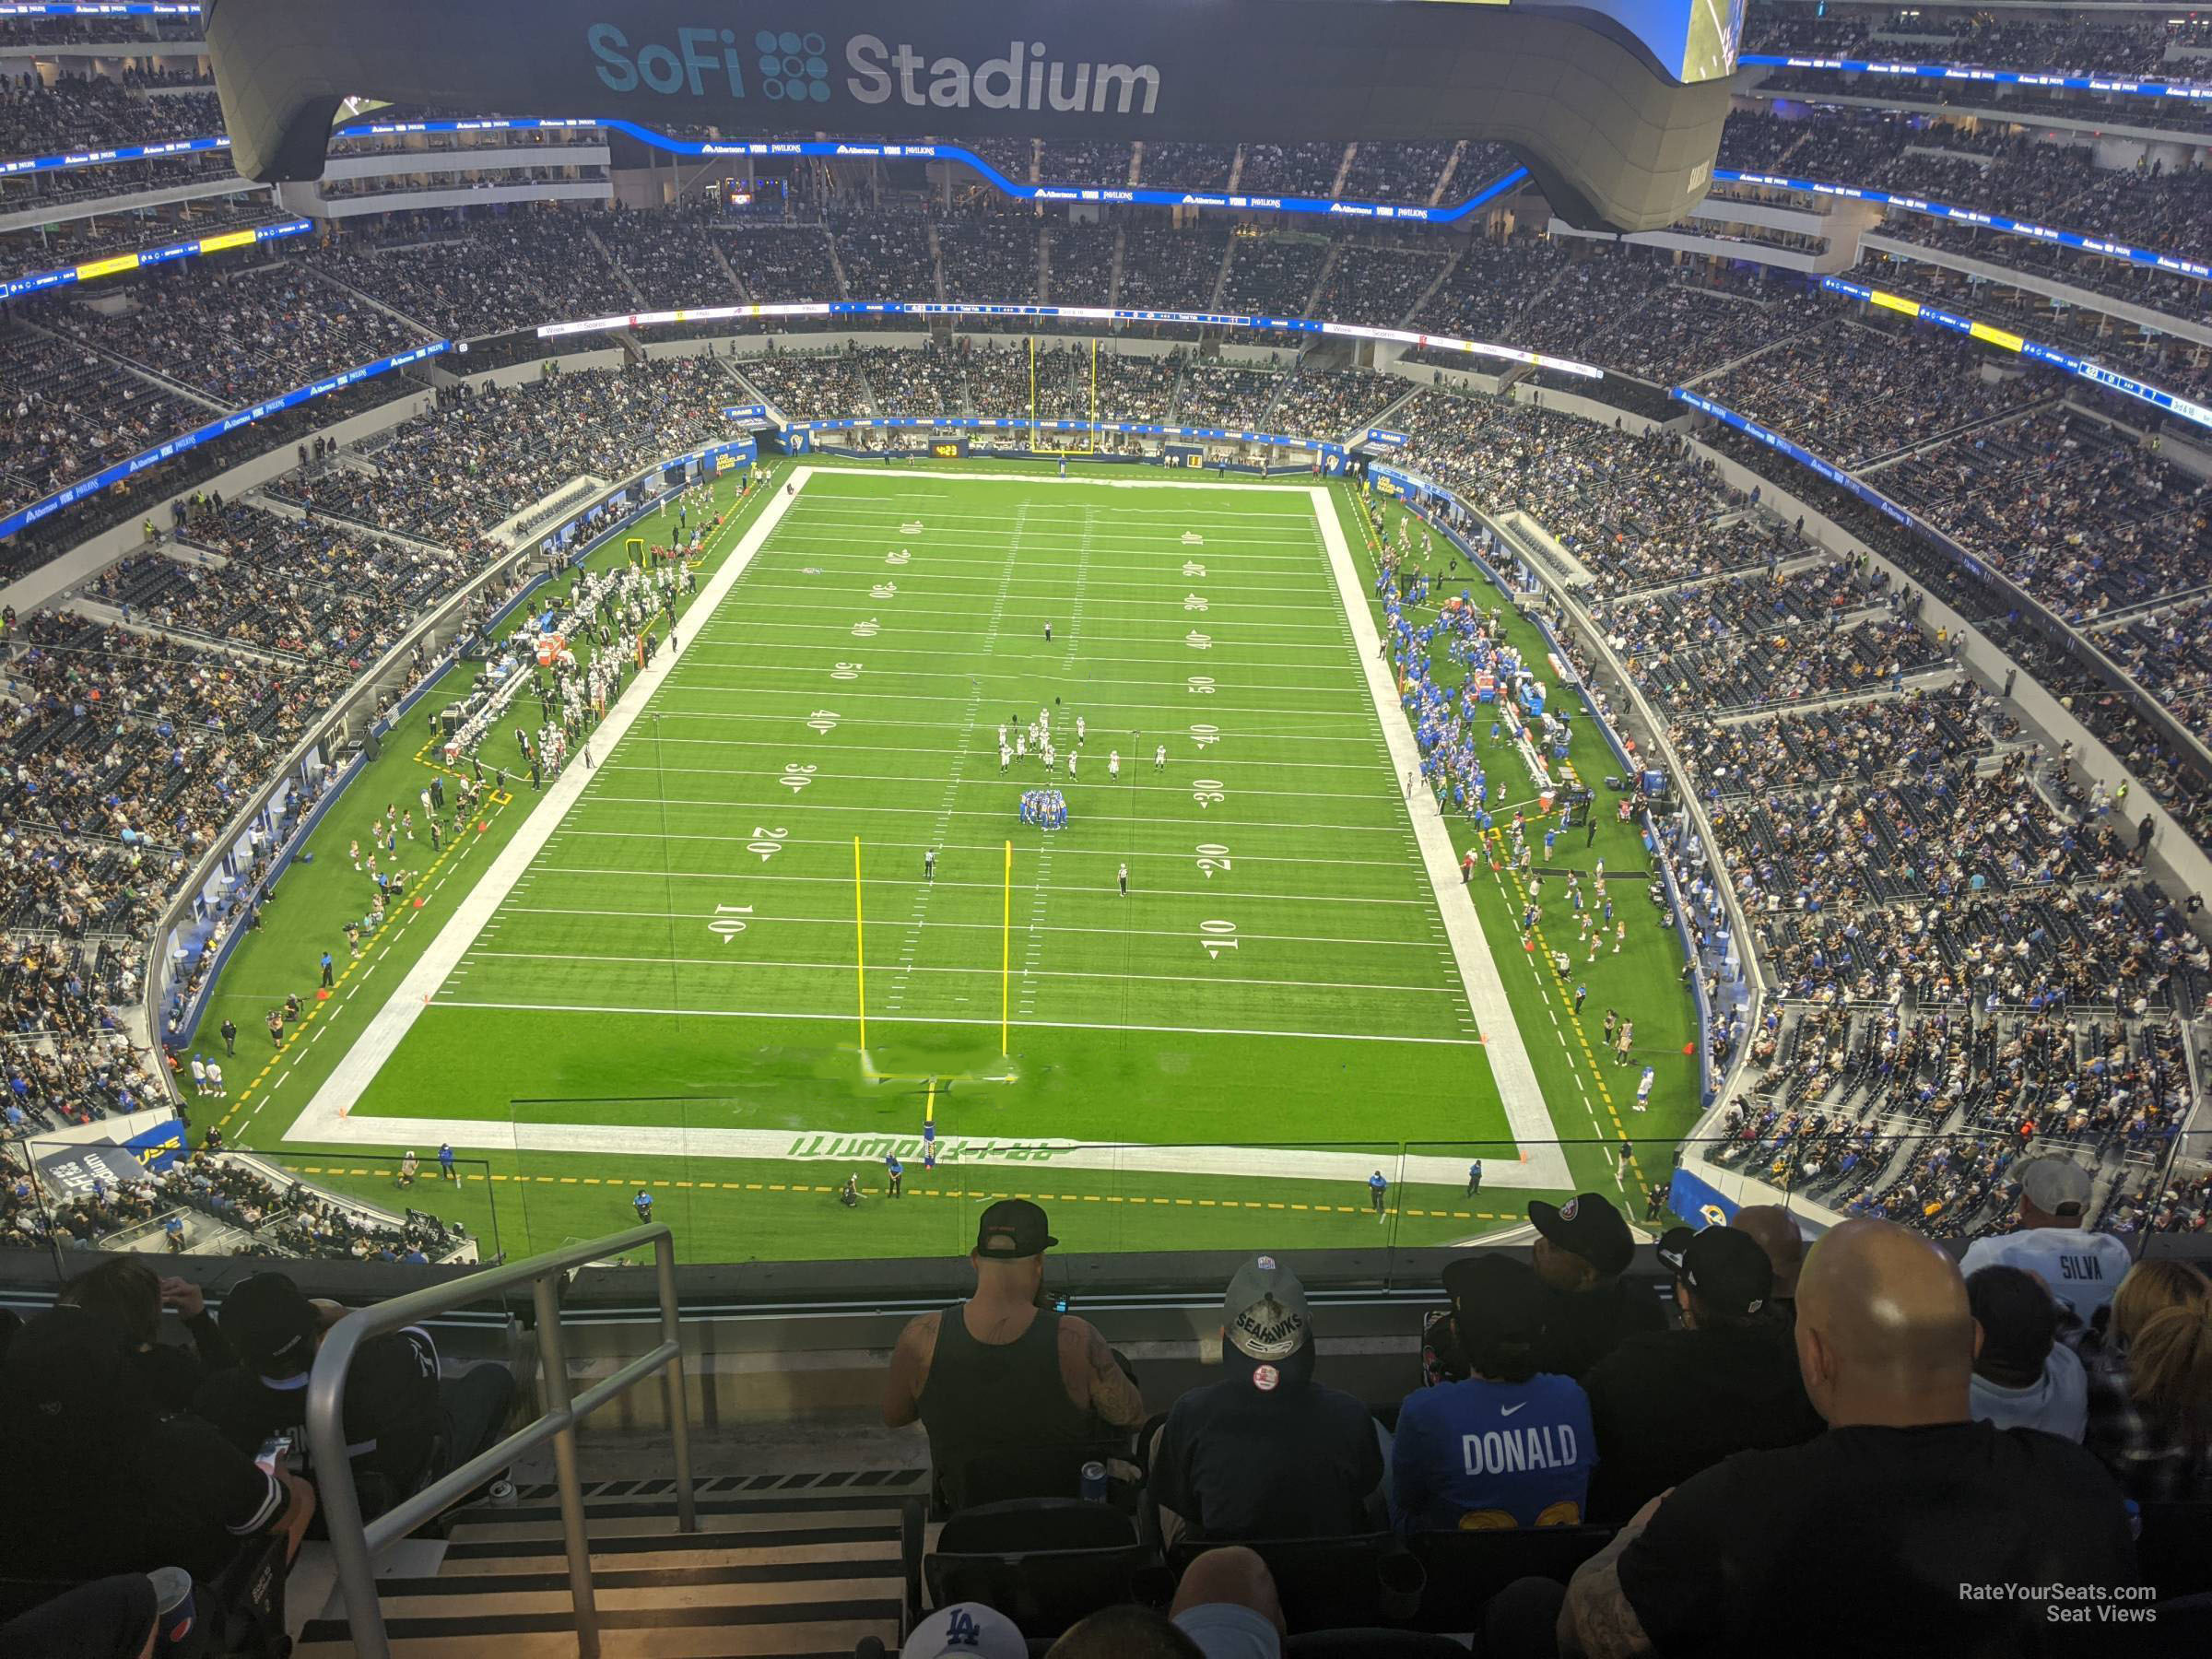 section 430 seat view  for football - sofi stadium